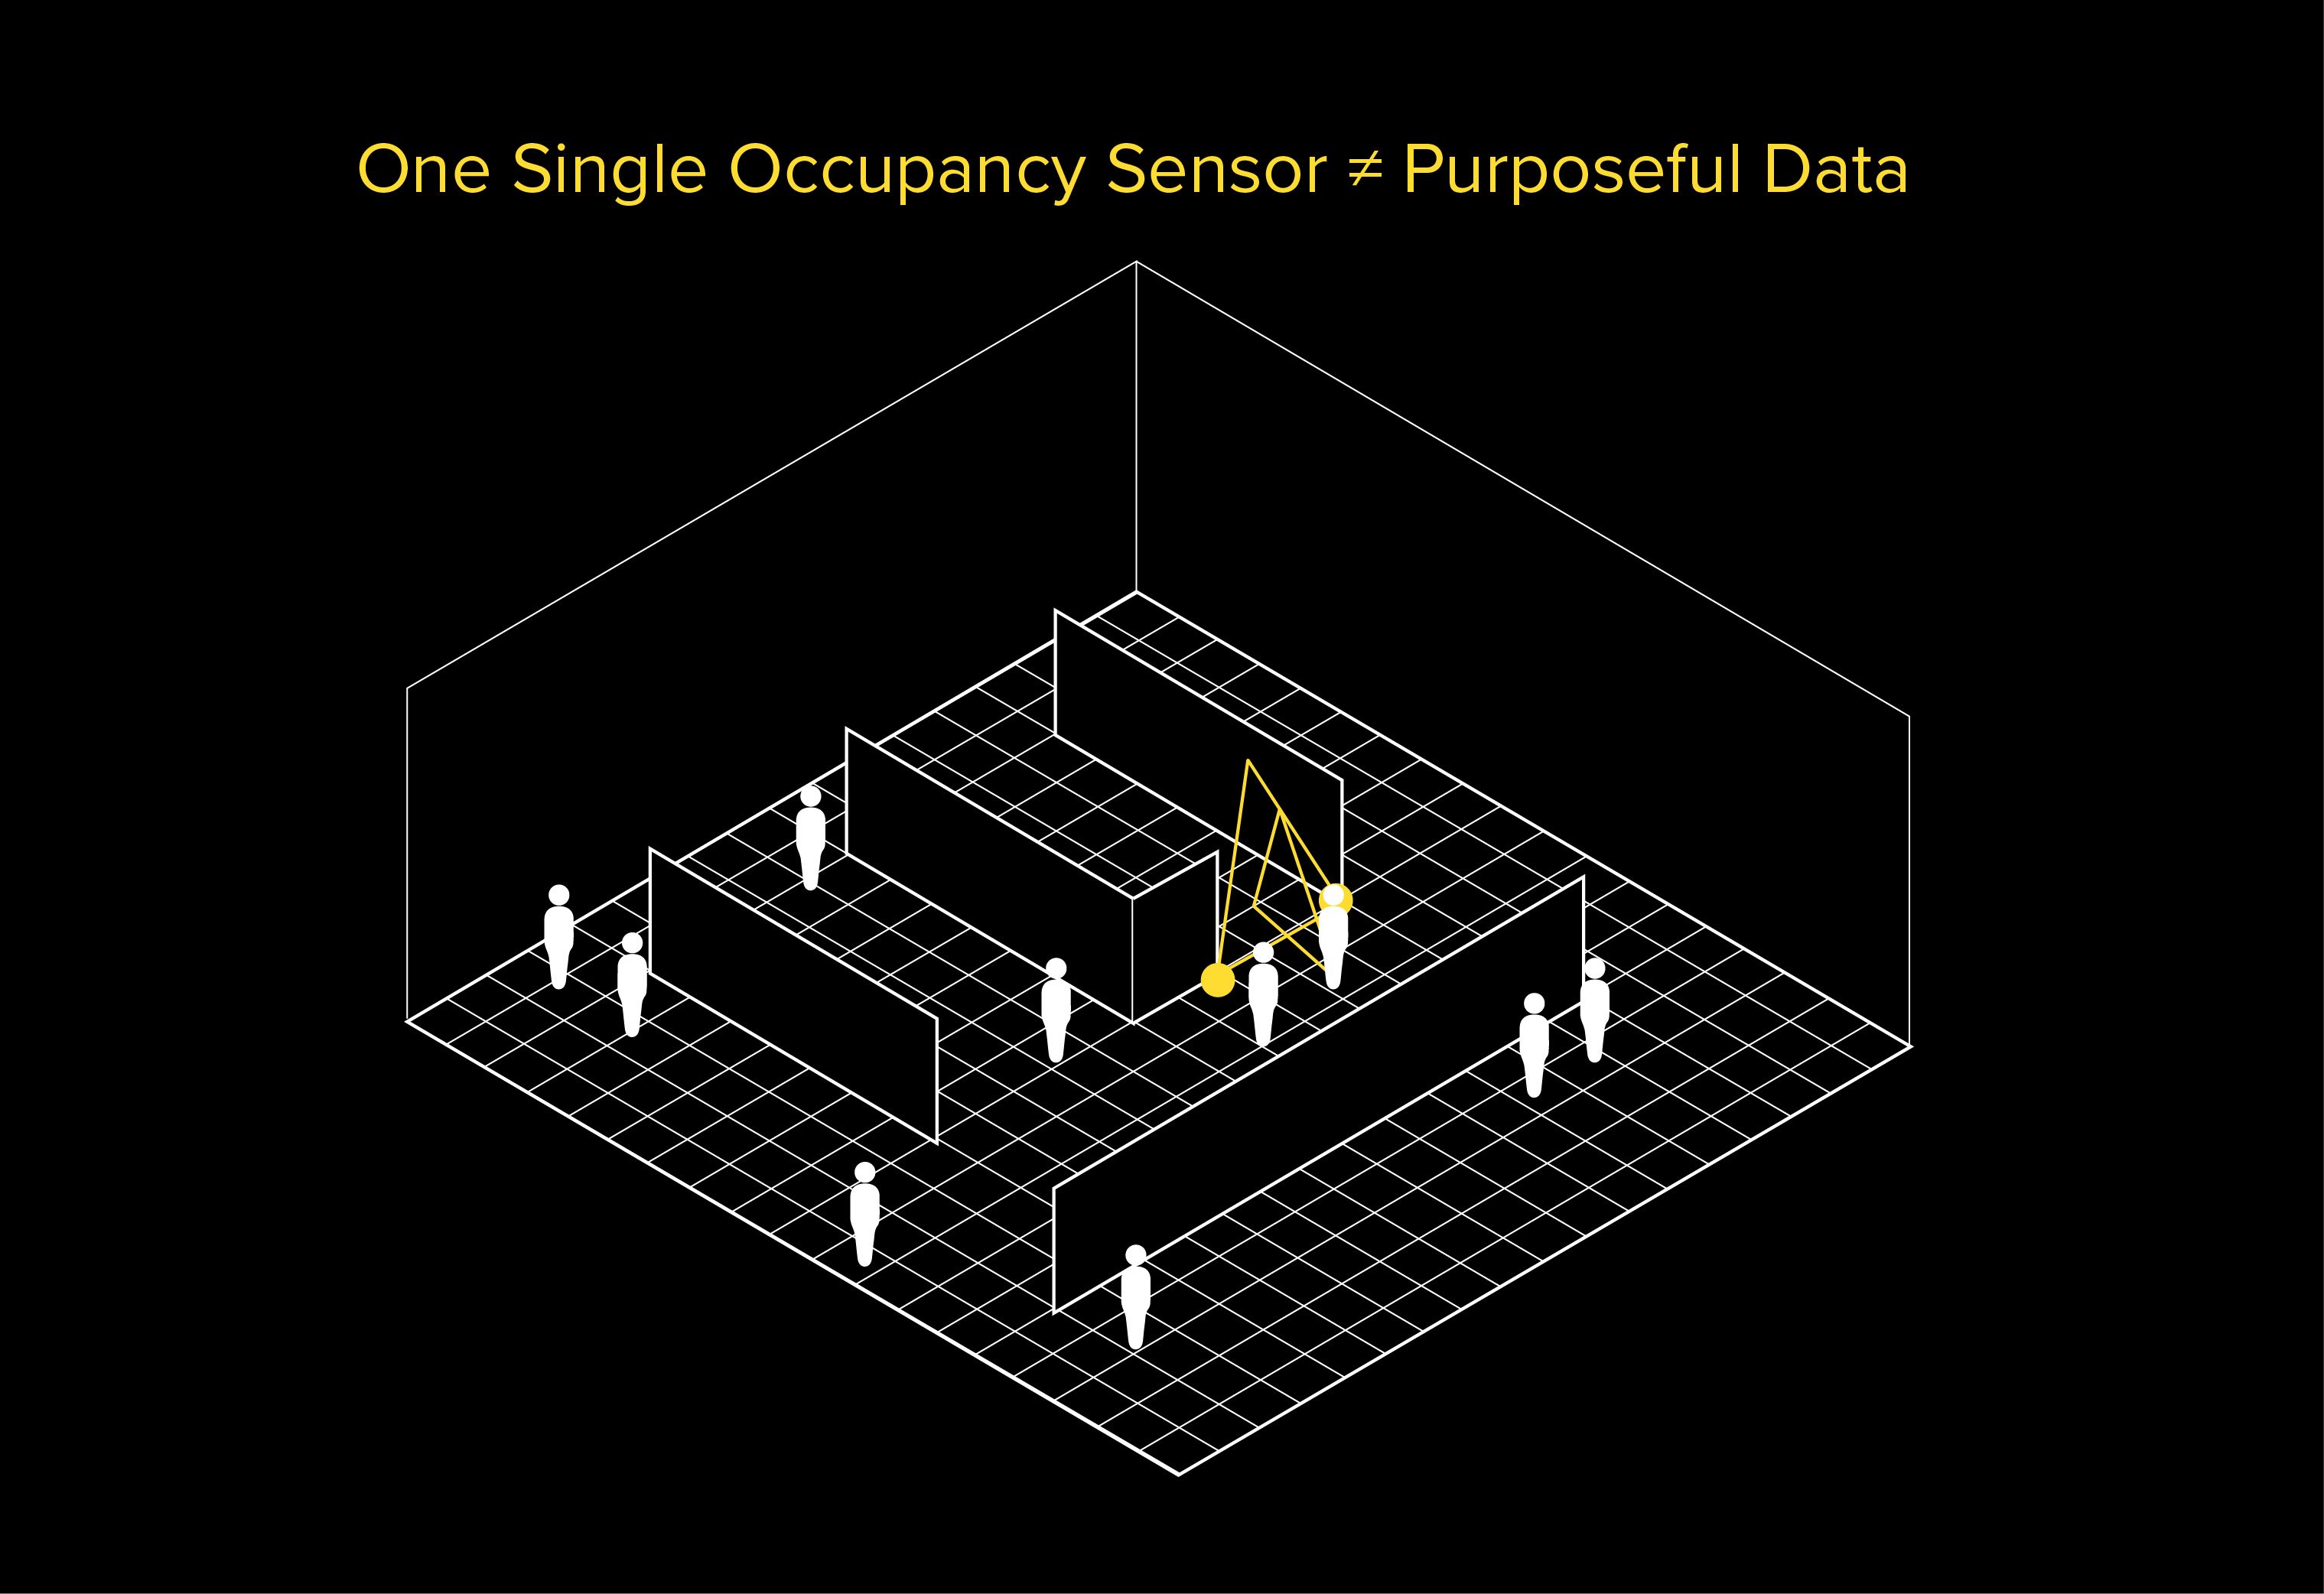 One Single Occupancy Sensor ≠ Purposeful Data